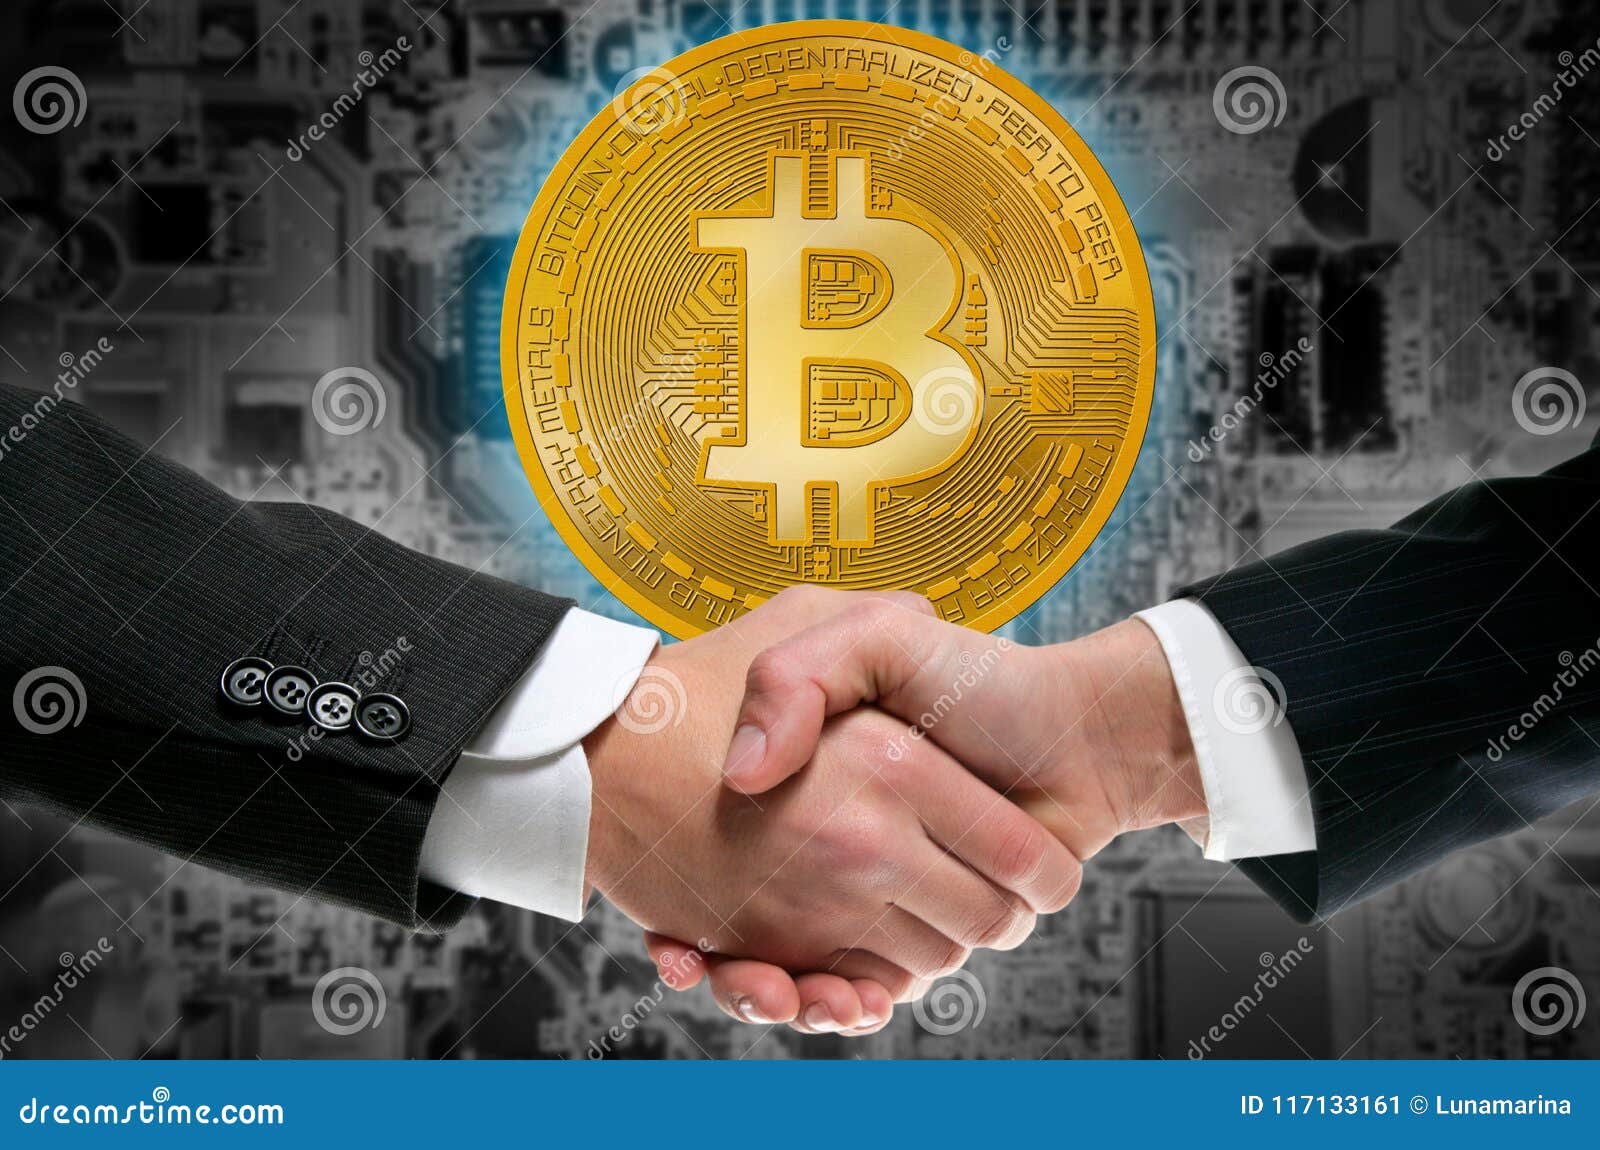 Bitcoin handshake 2016 bitcoin price